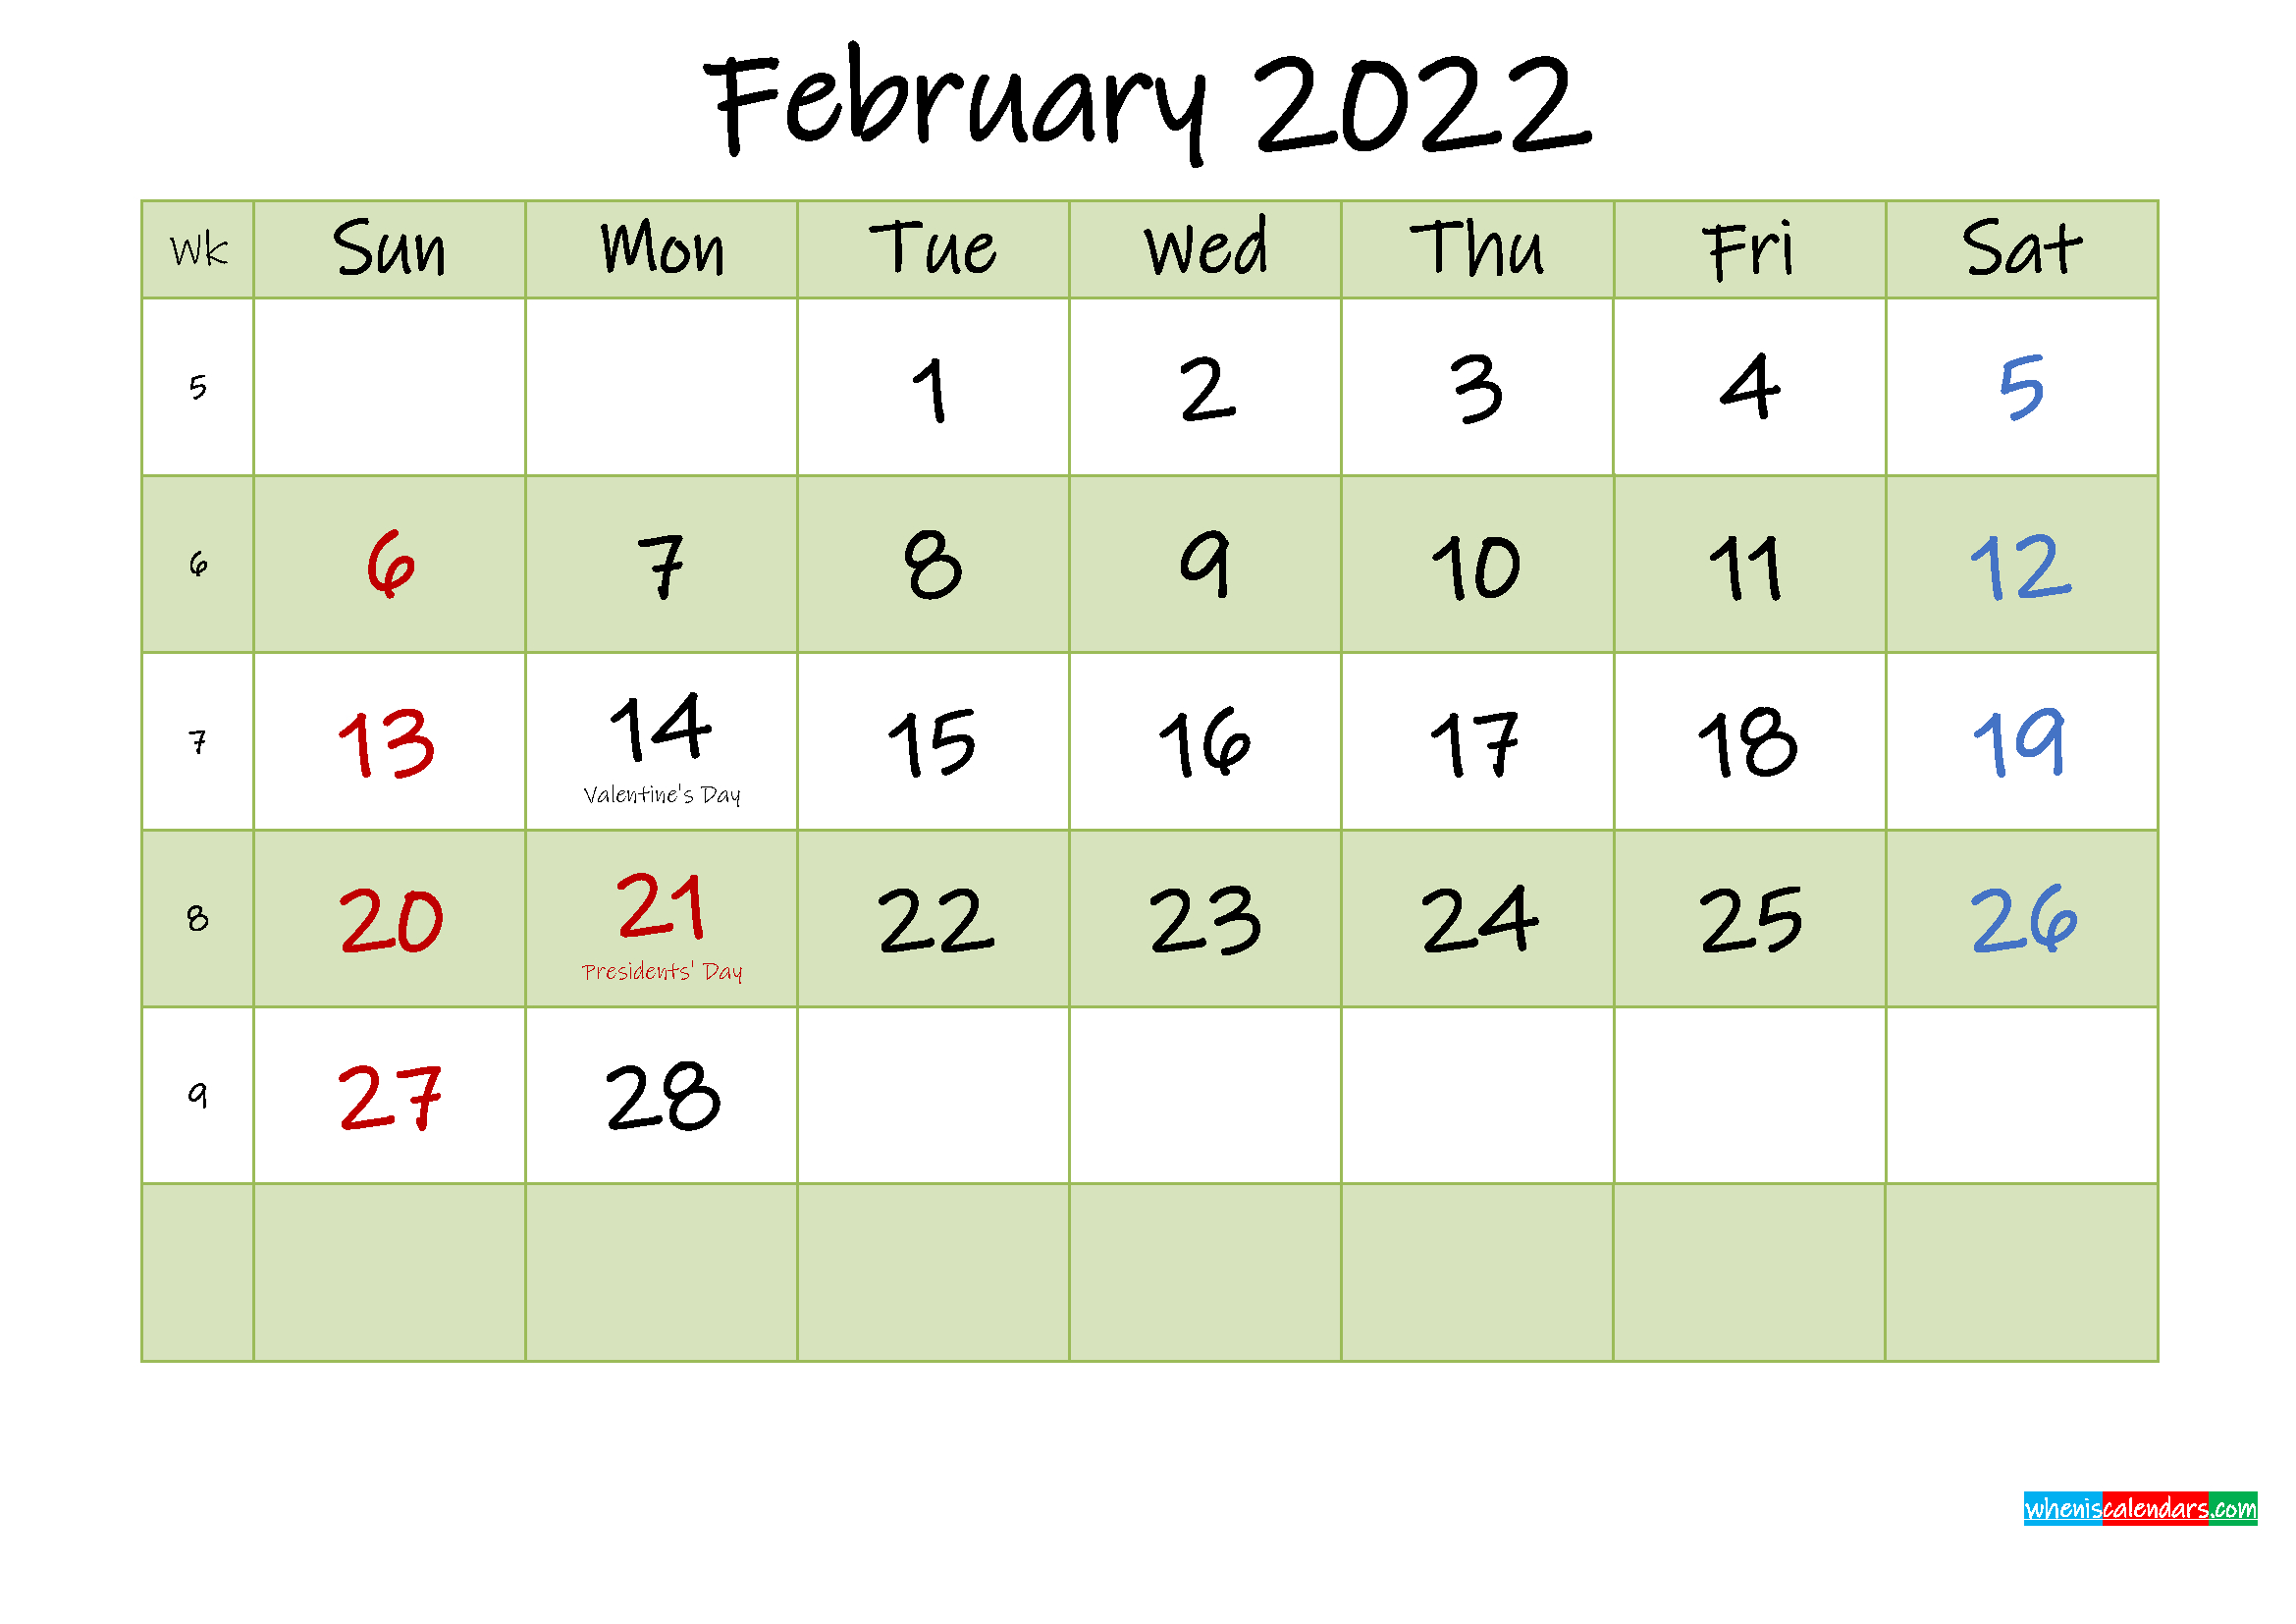 Take February 2022 Calendar Image